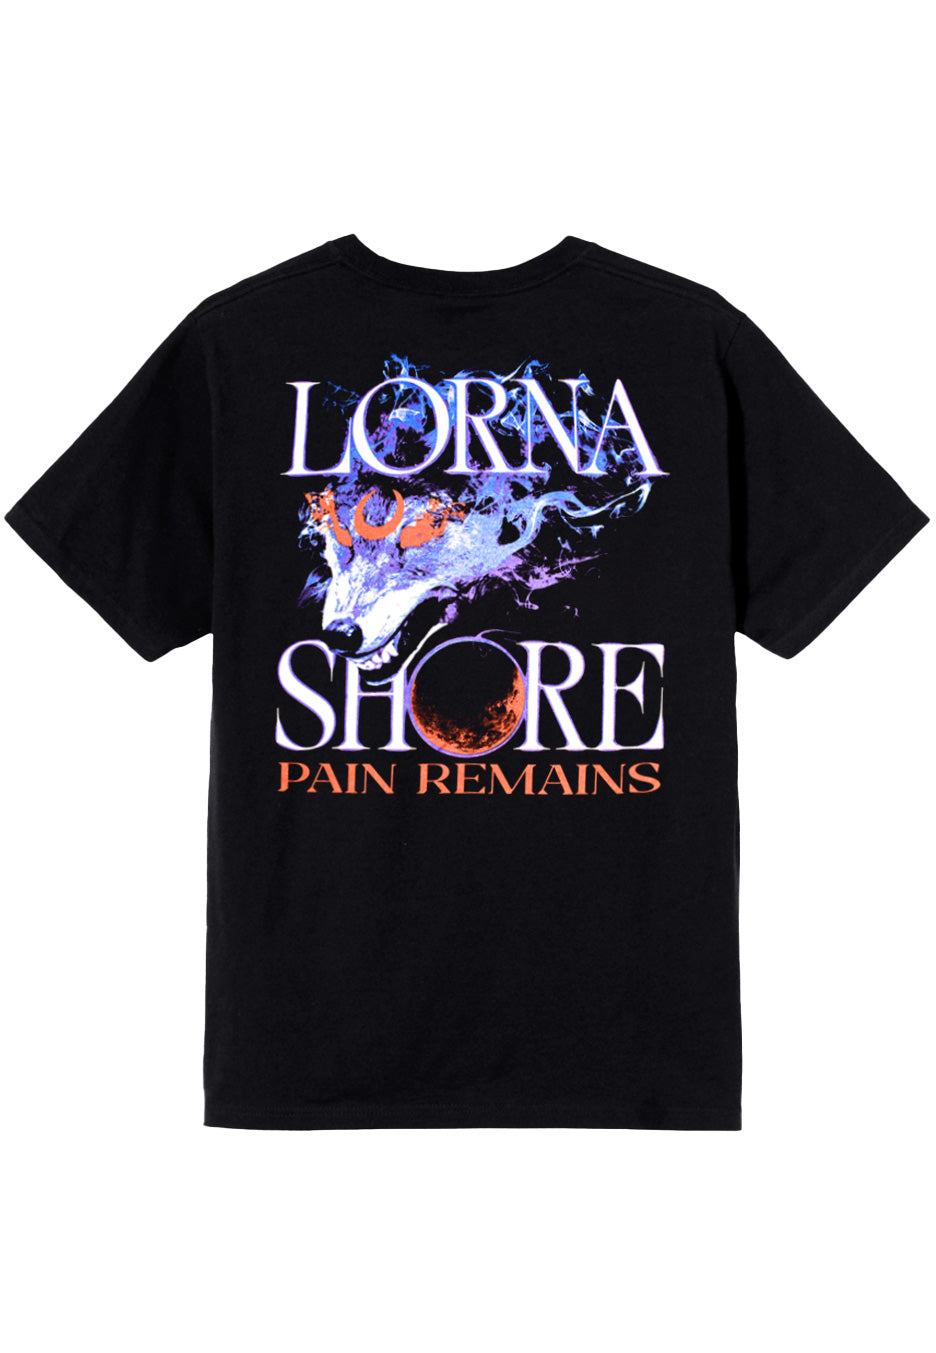 Lorna Shore - Wolf - T-Shirt